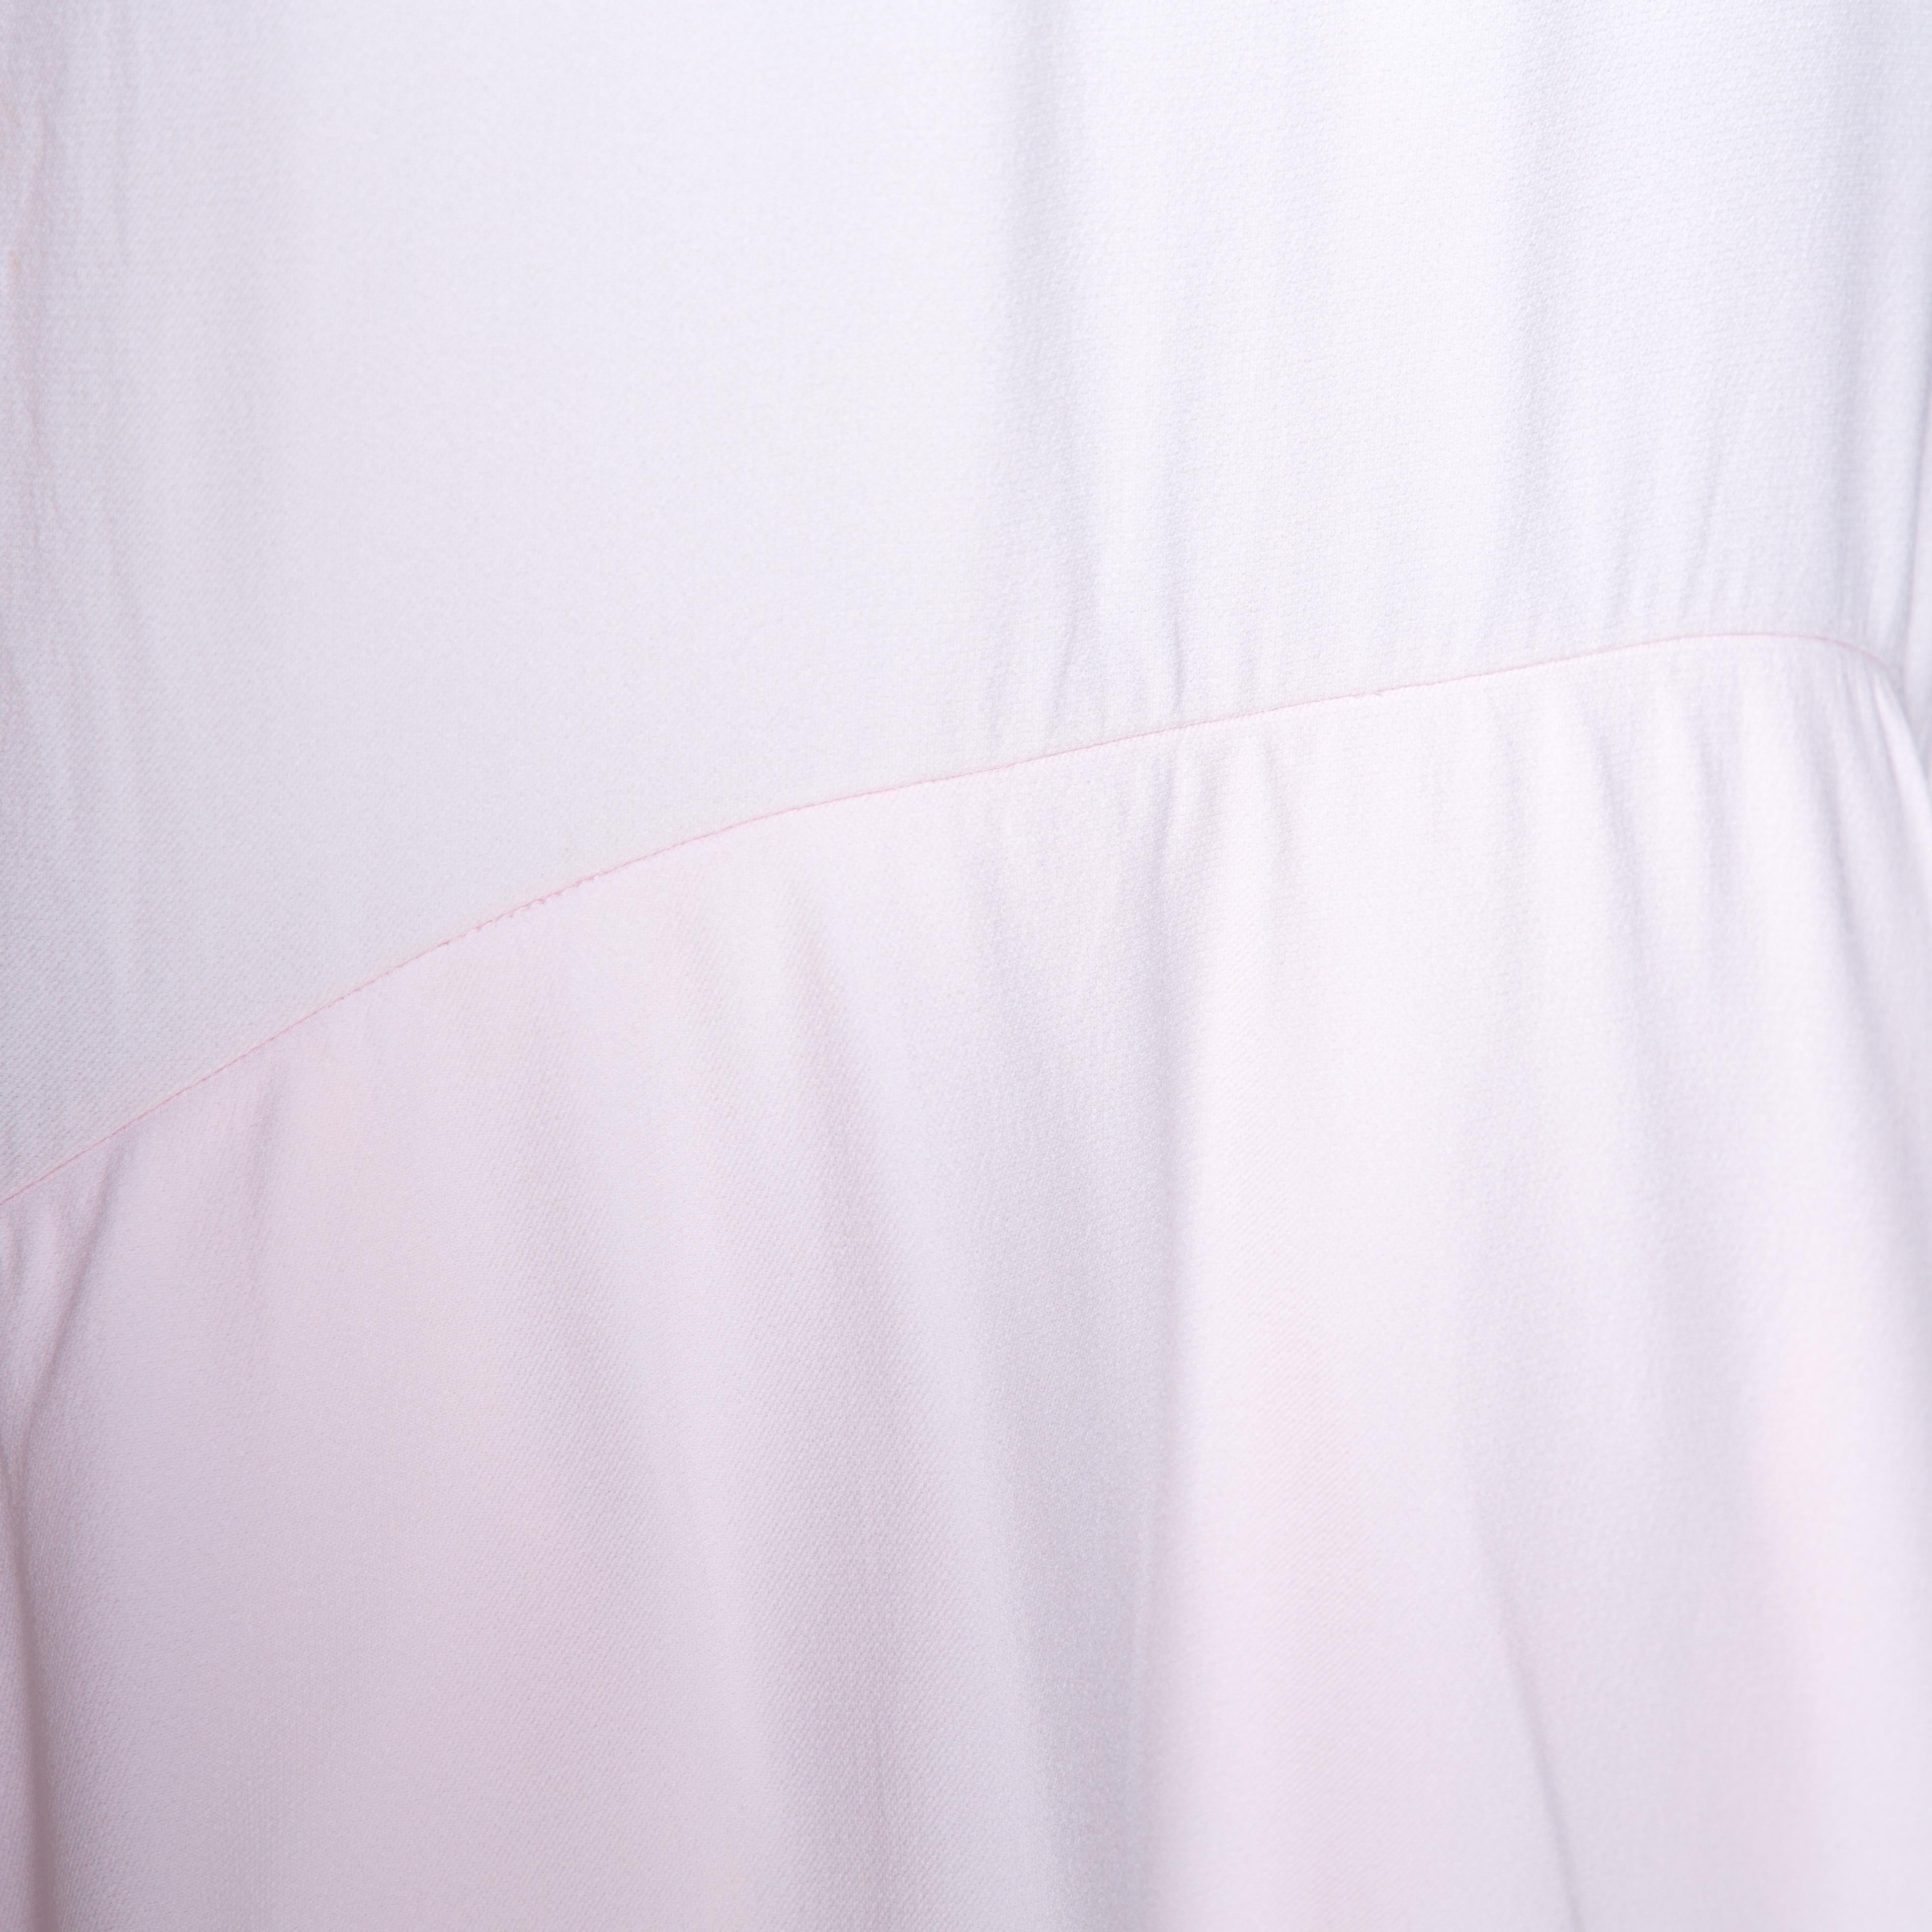 Chloe Pink Mist Crepe Flared Flounce Dress M In Good Condition For Sale In Dubai, Al Qouz 2